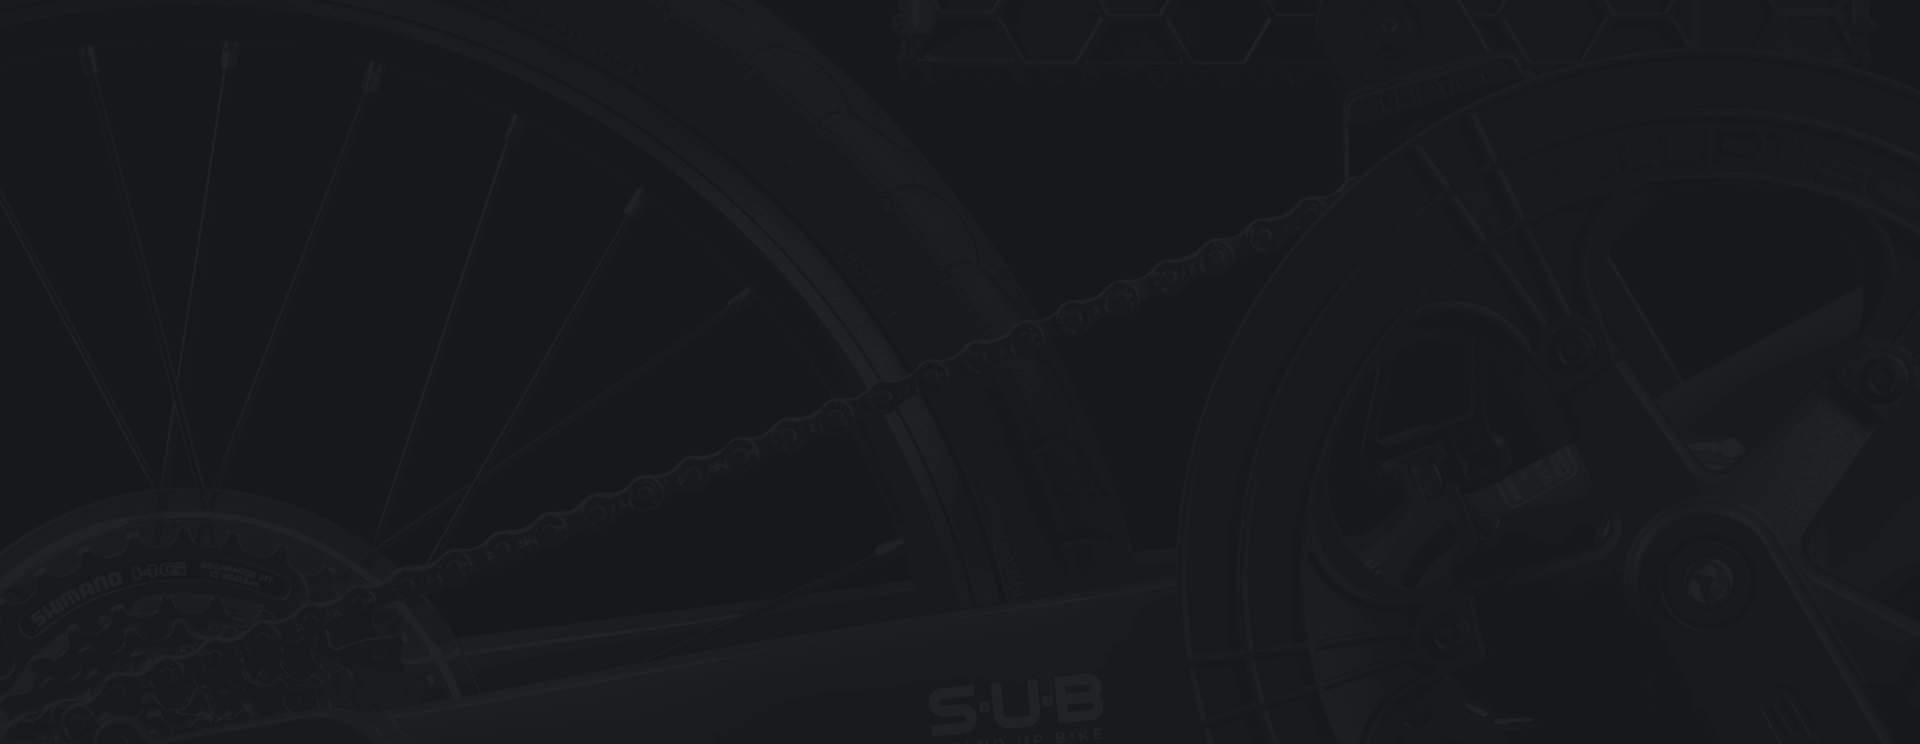 Black bike black background